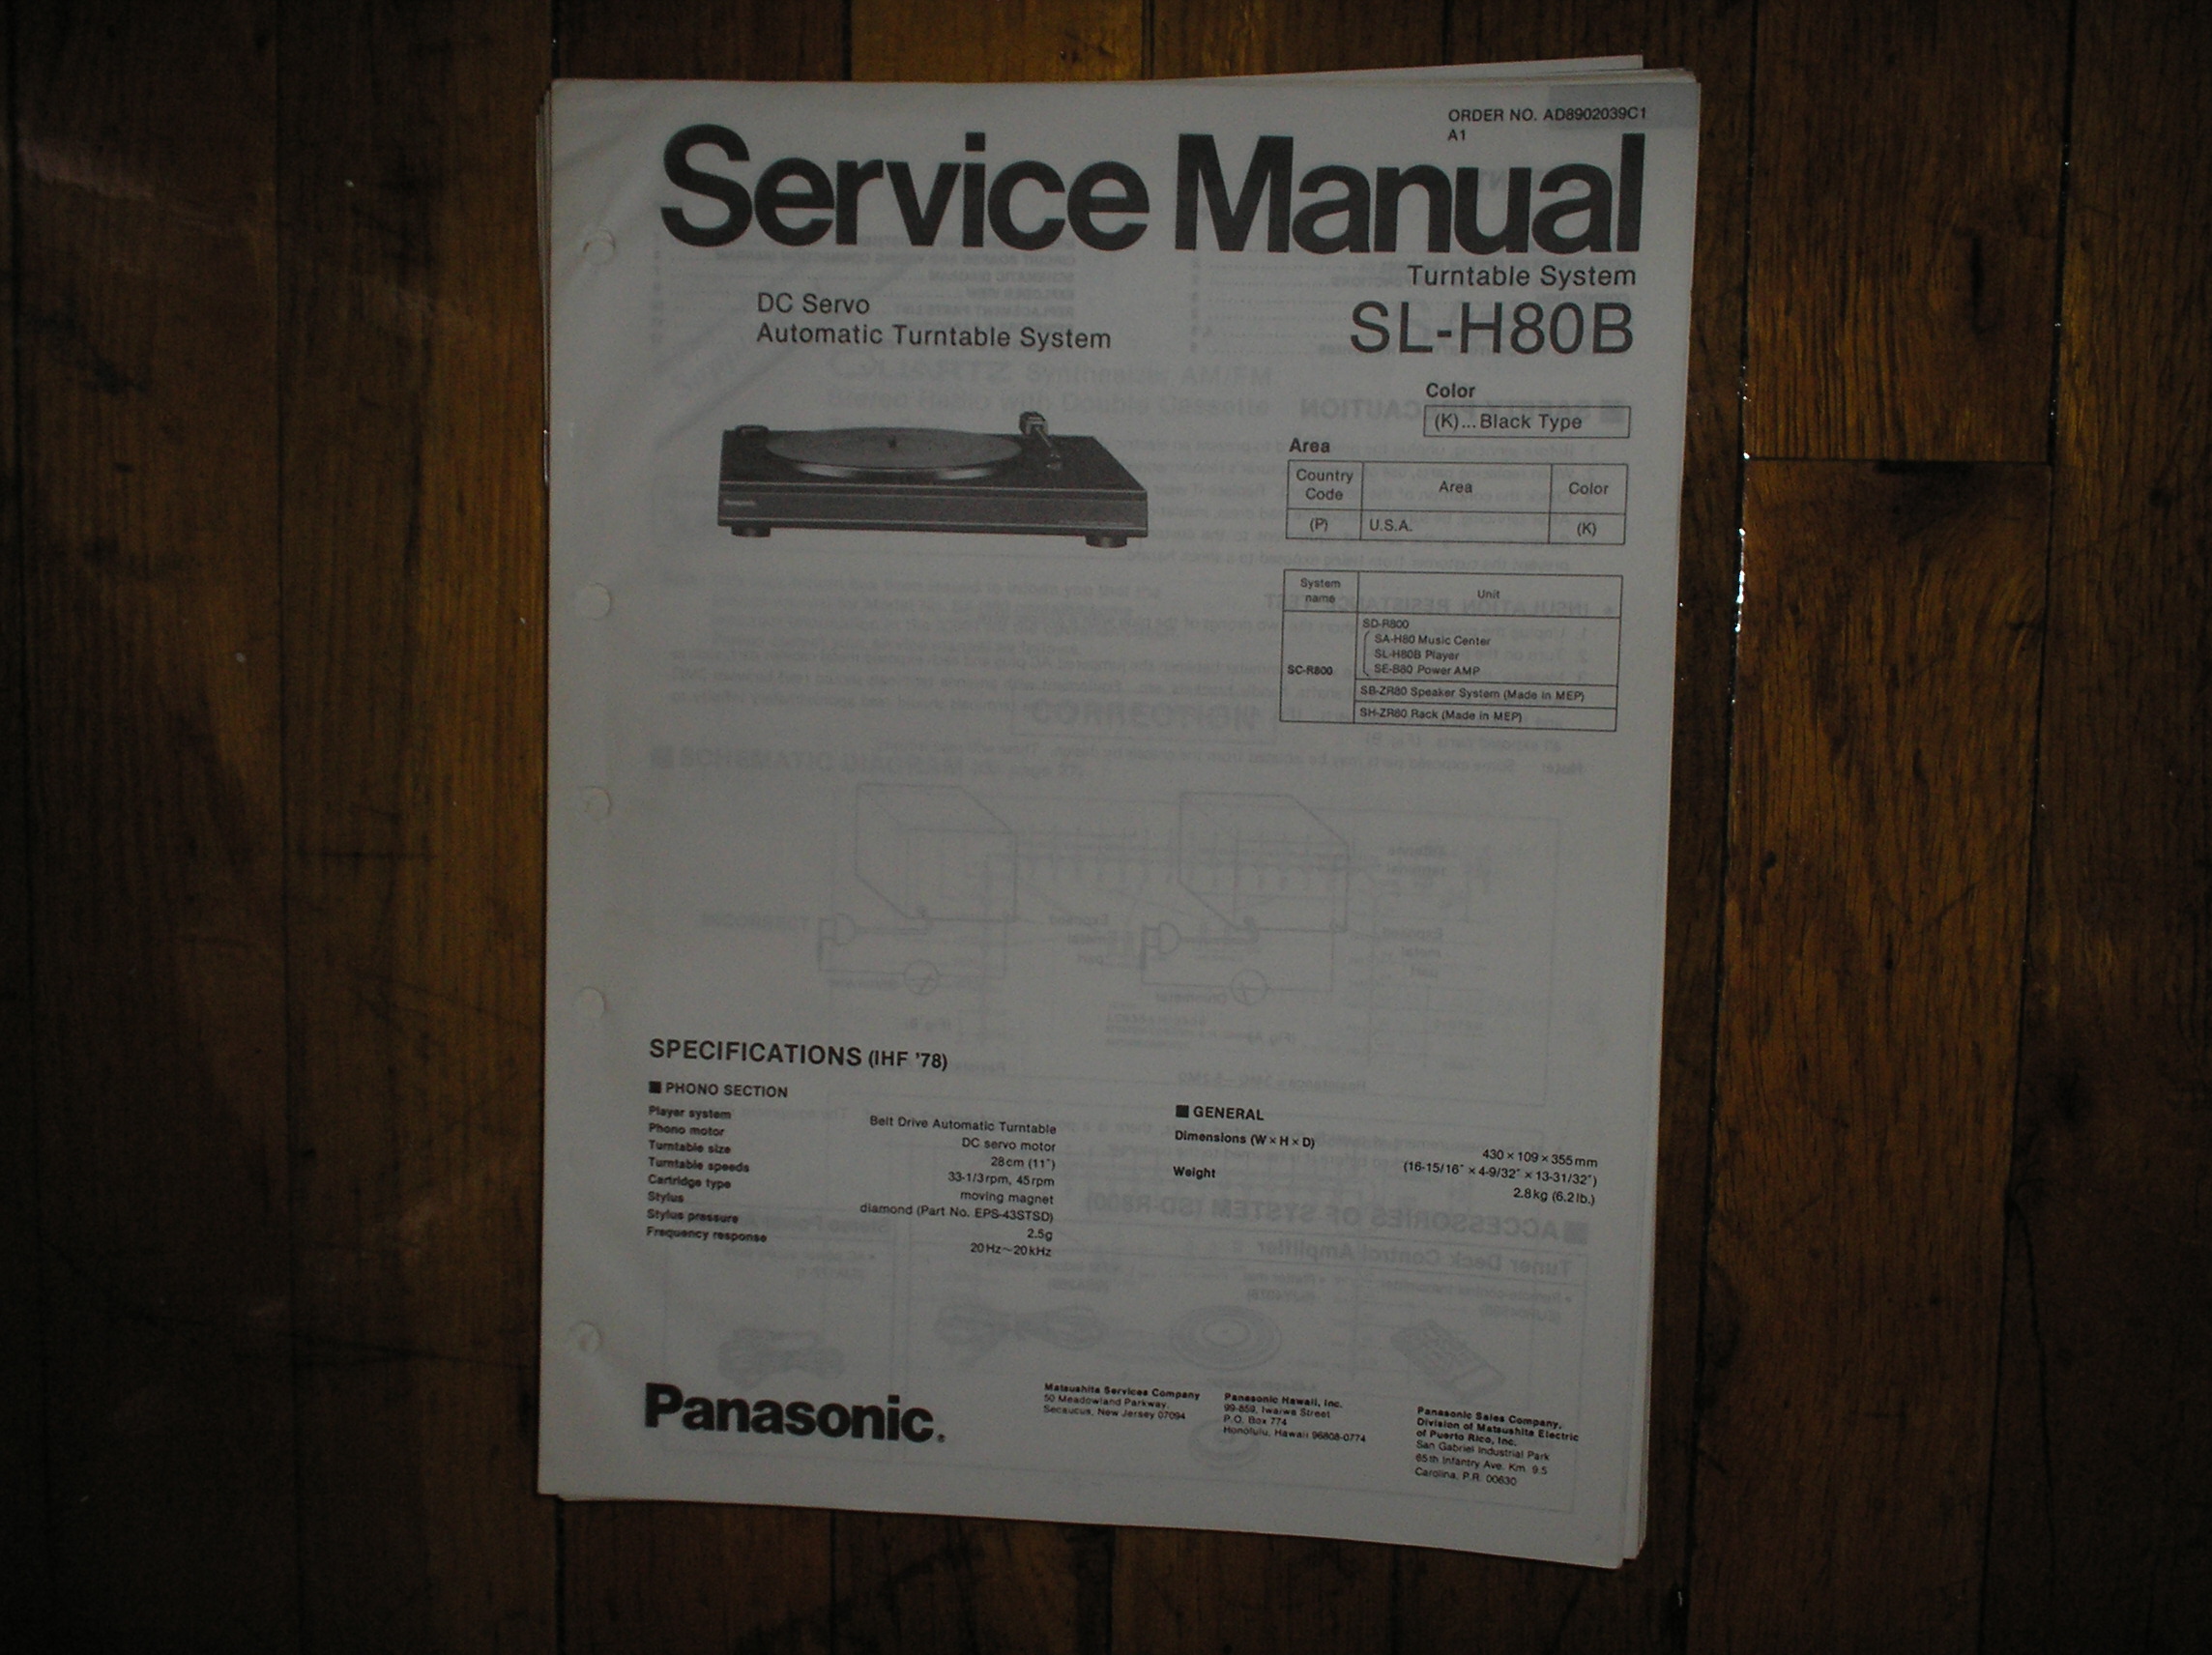 SL-H80B Turntable Service Manual